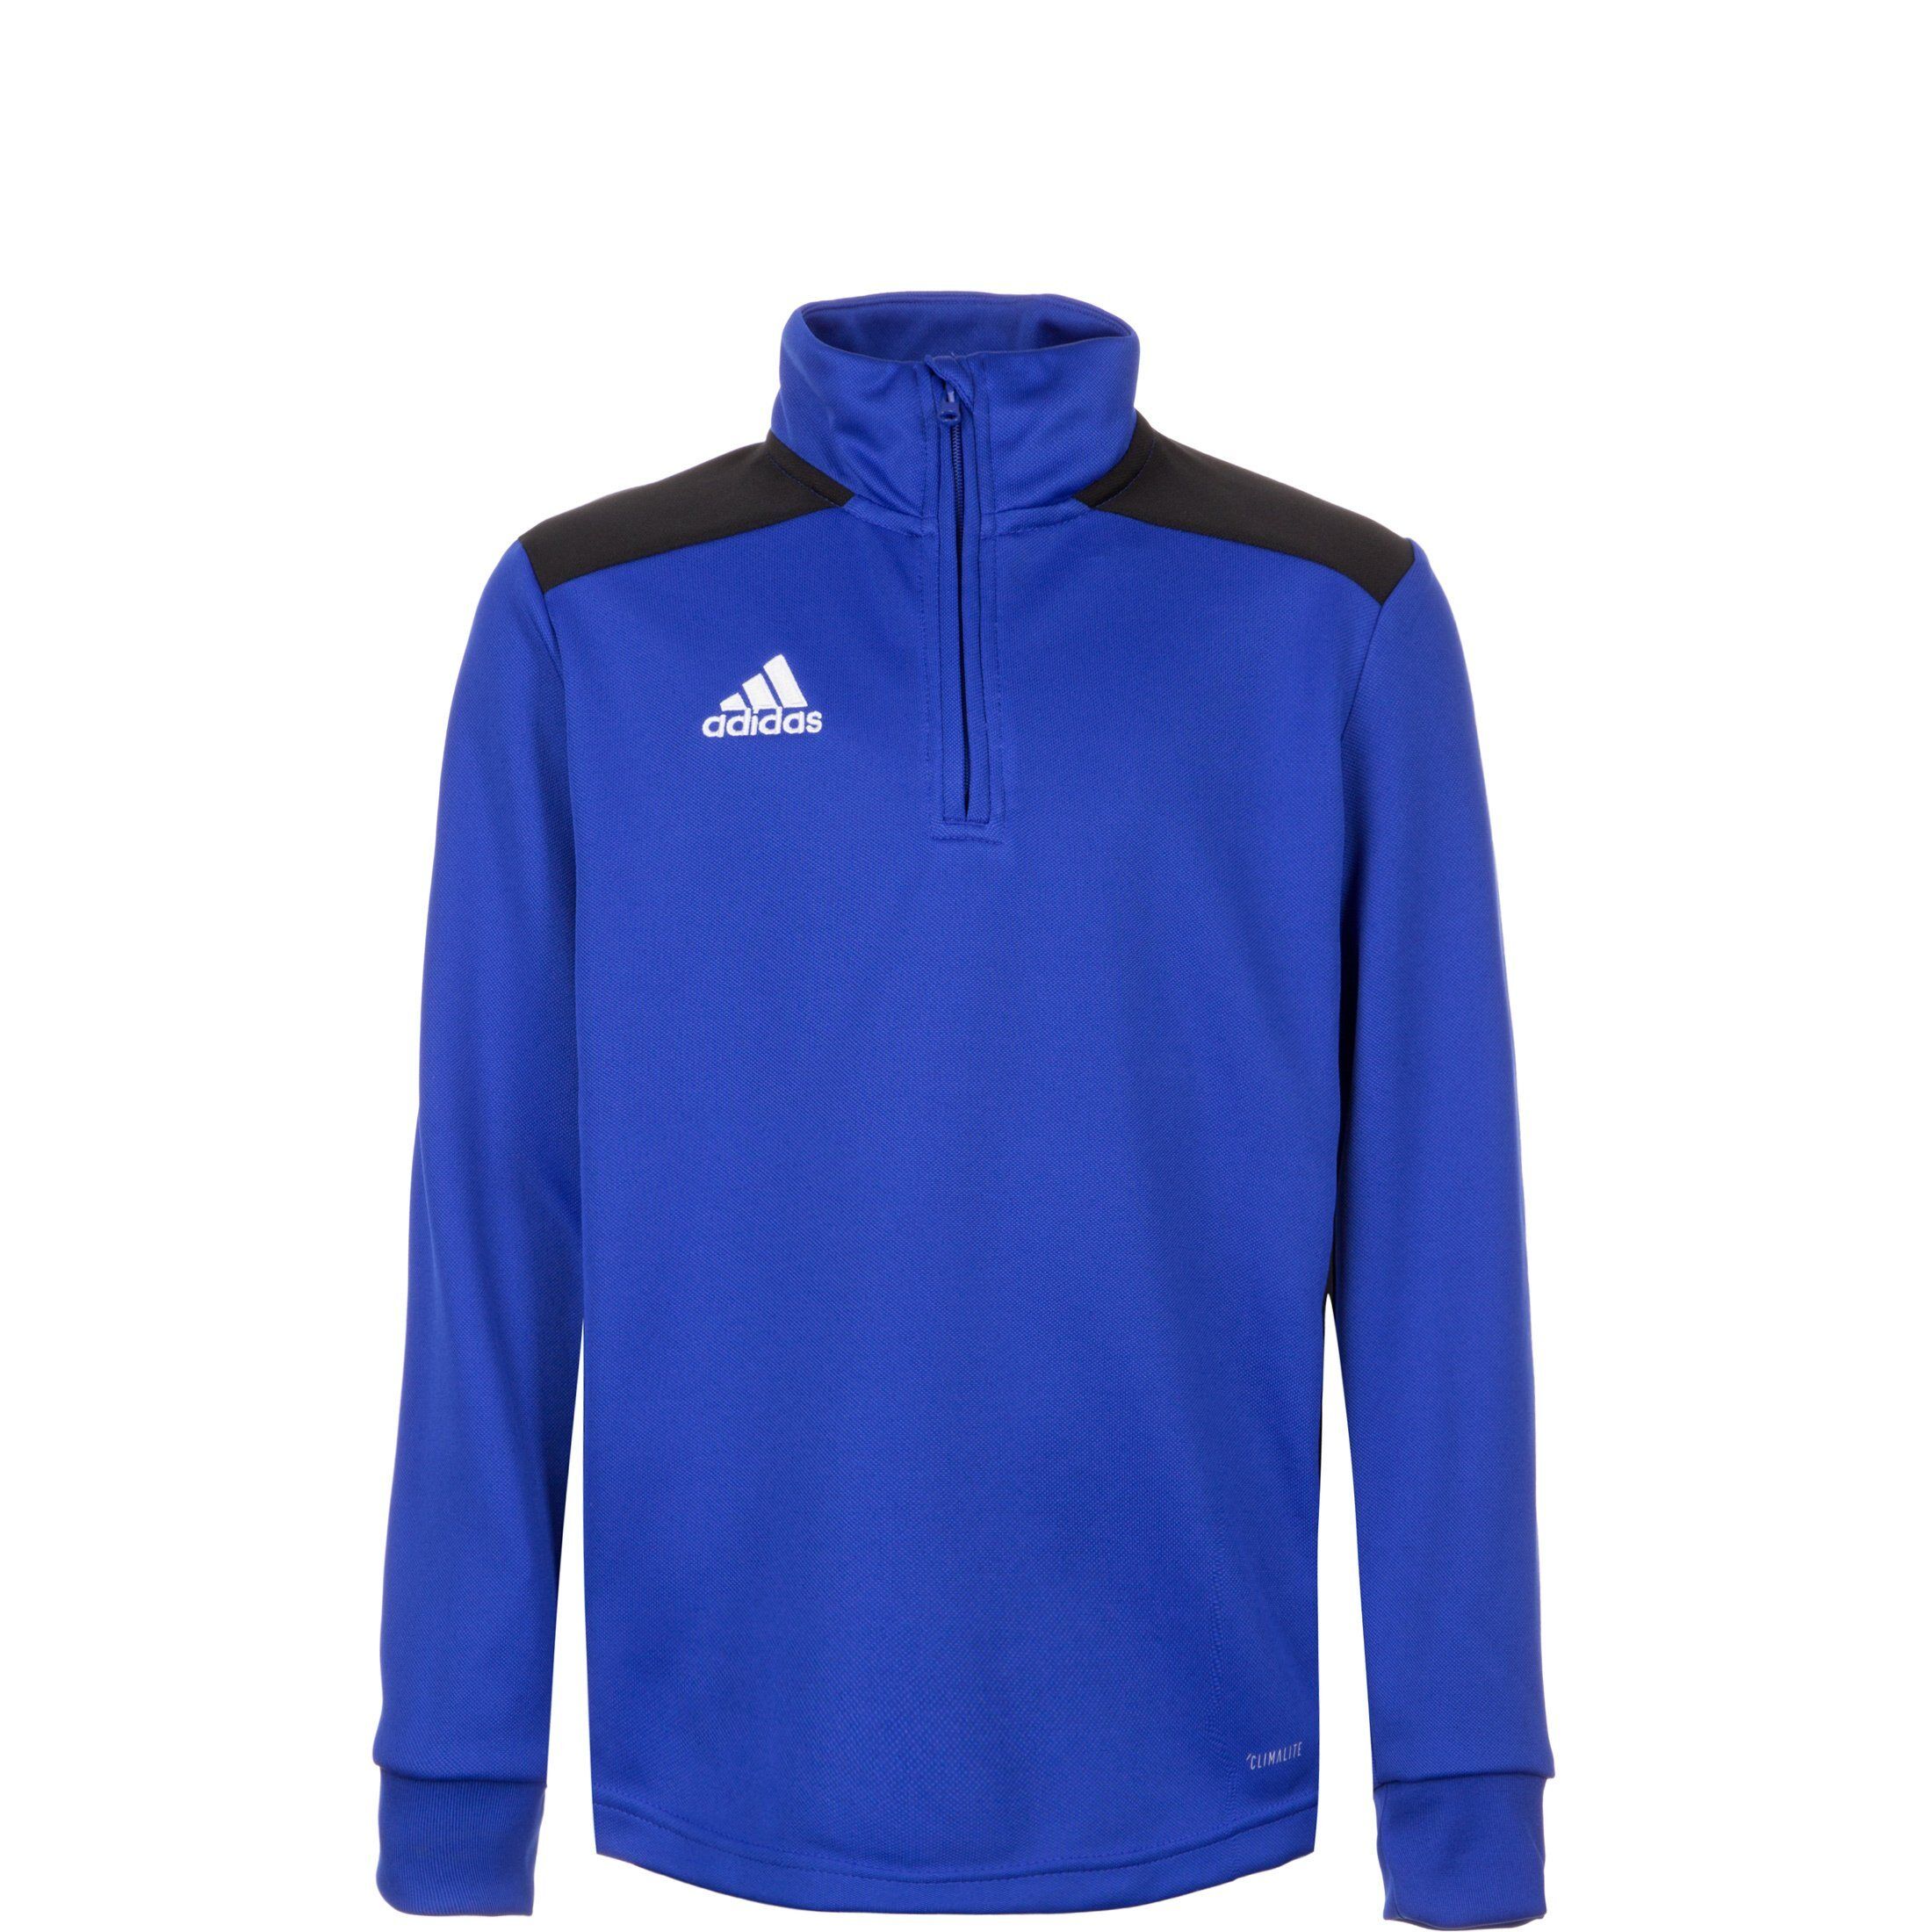 Adidas Performance Trainingsshirt »Regista 18«, blau-schwarz